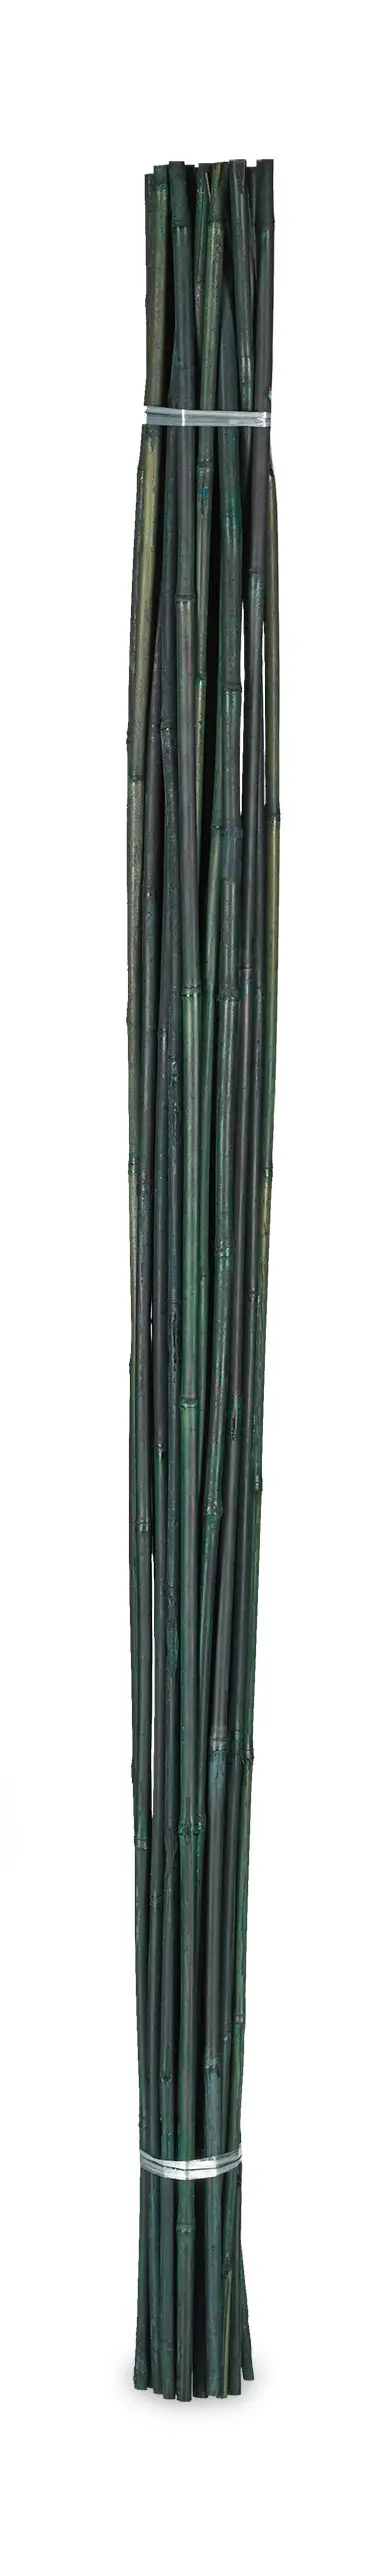 Bambus Pflanzst盲be 25er Set 150 cm